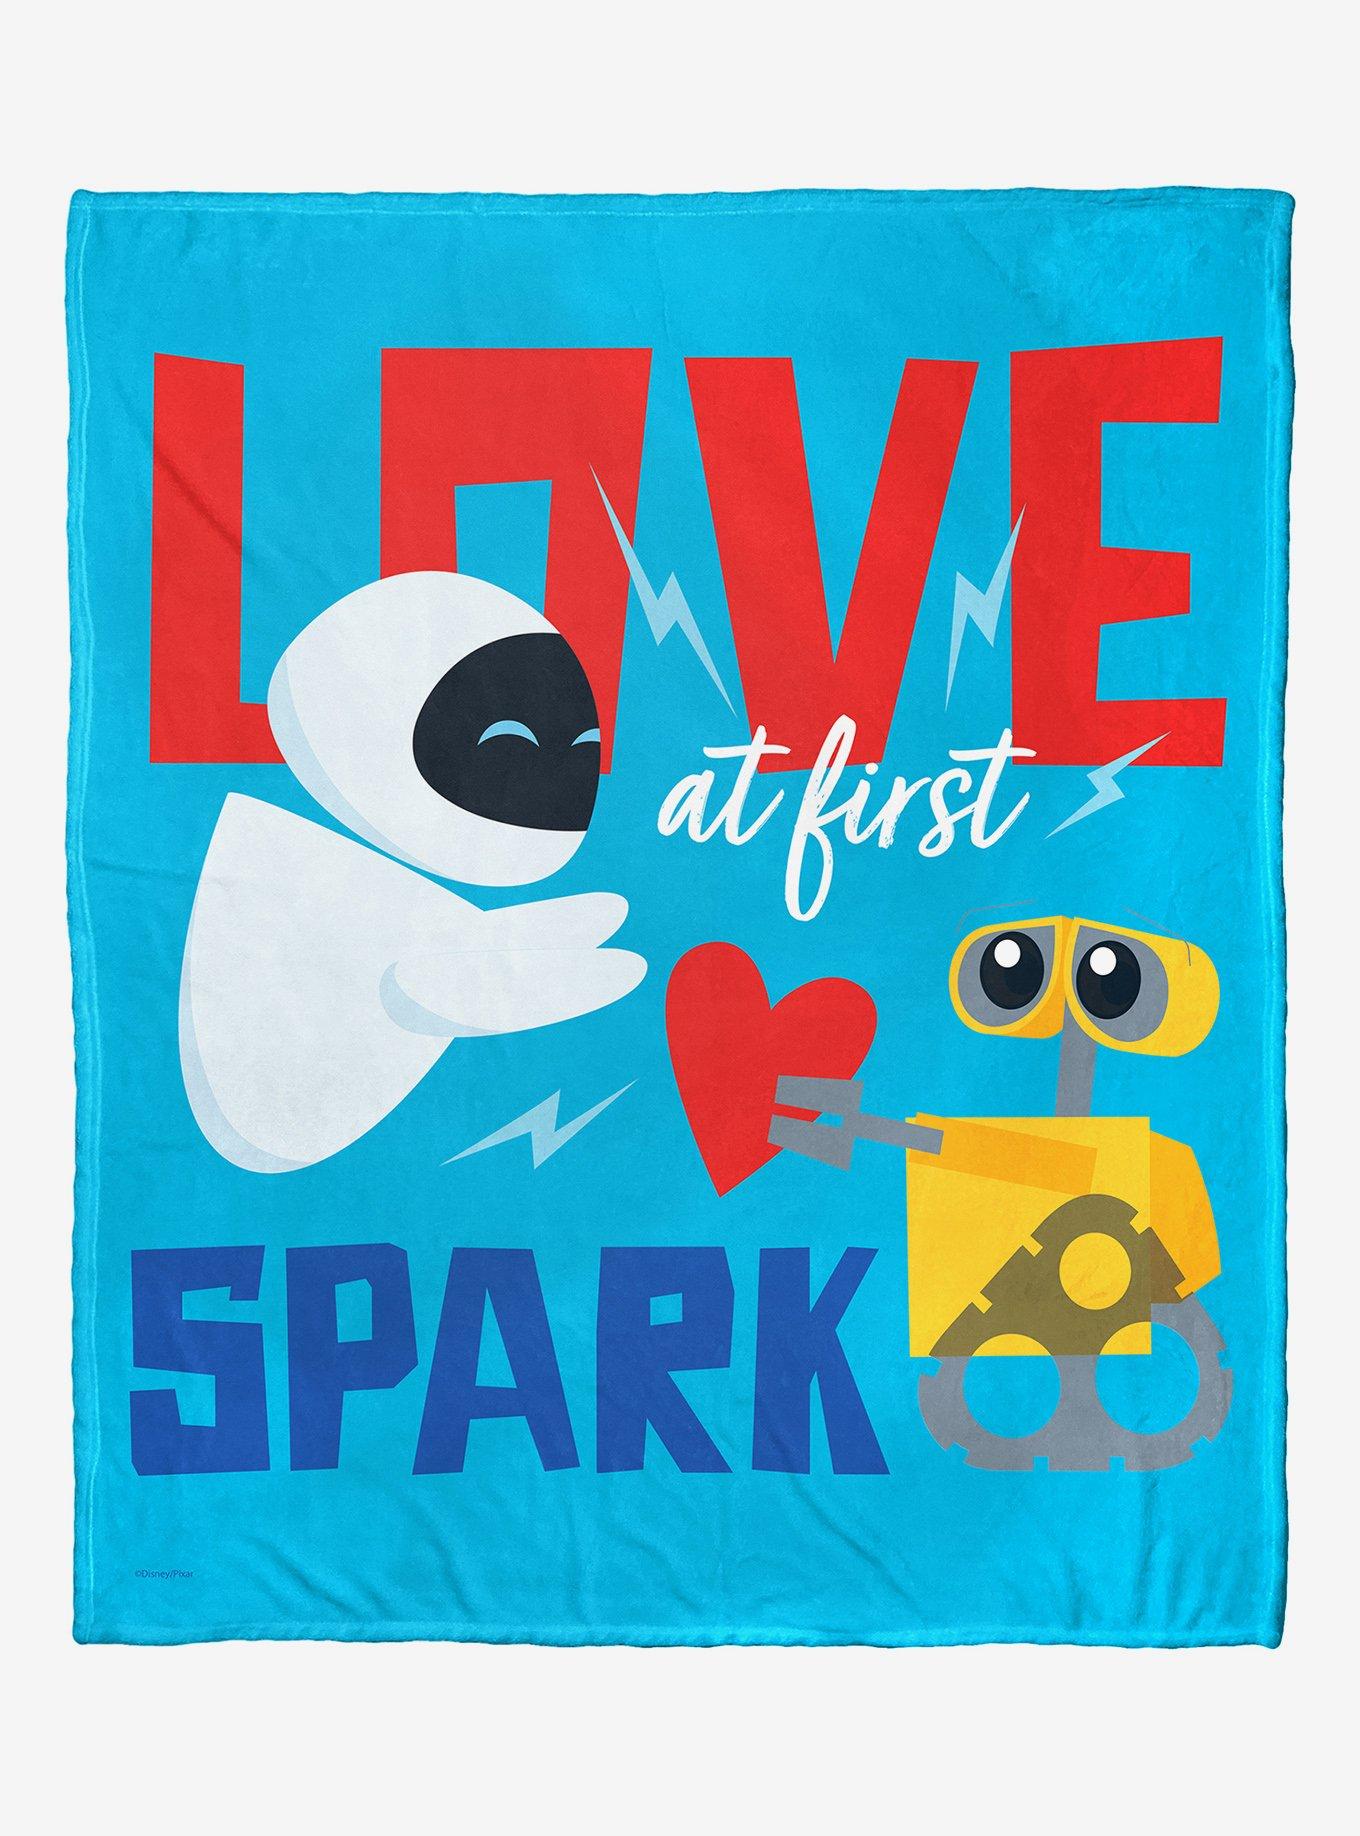 Disney Pixar Wall-E Love At First Spark Throw Blanket